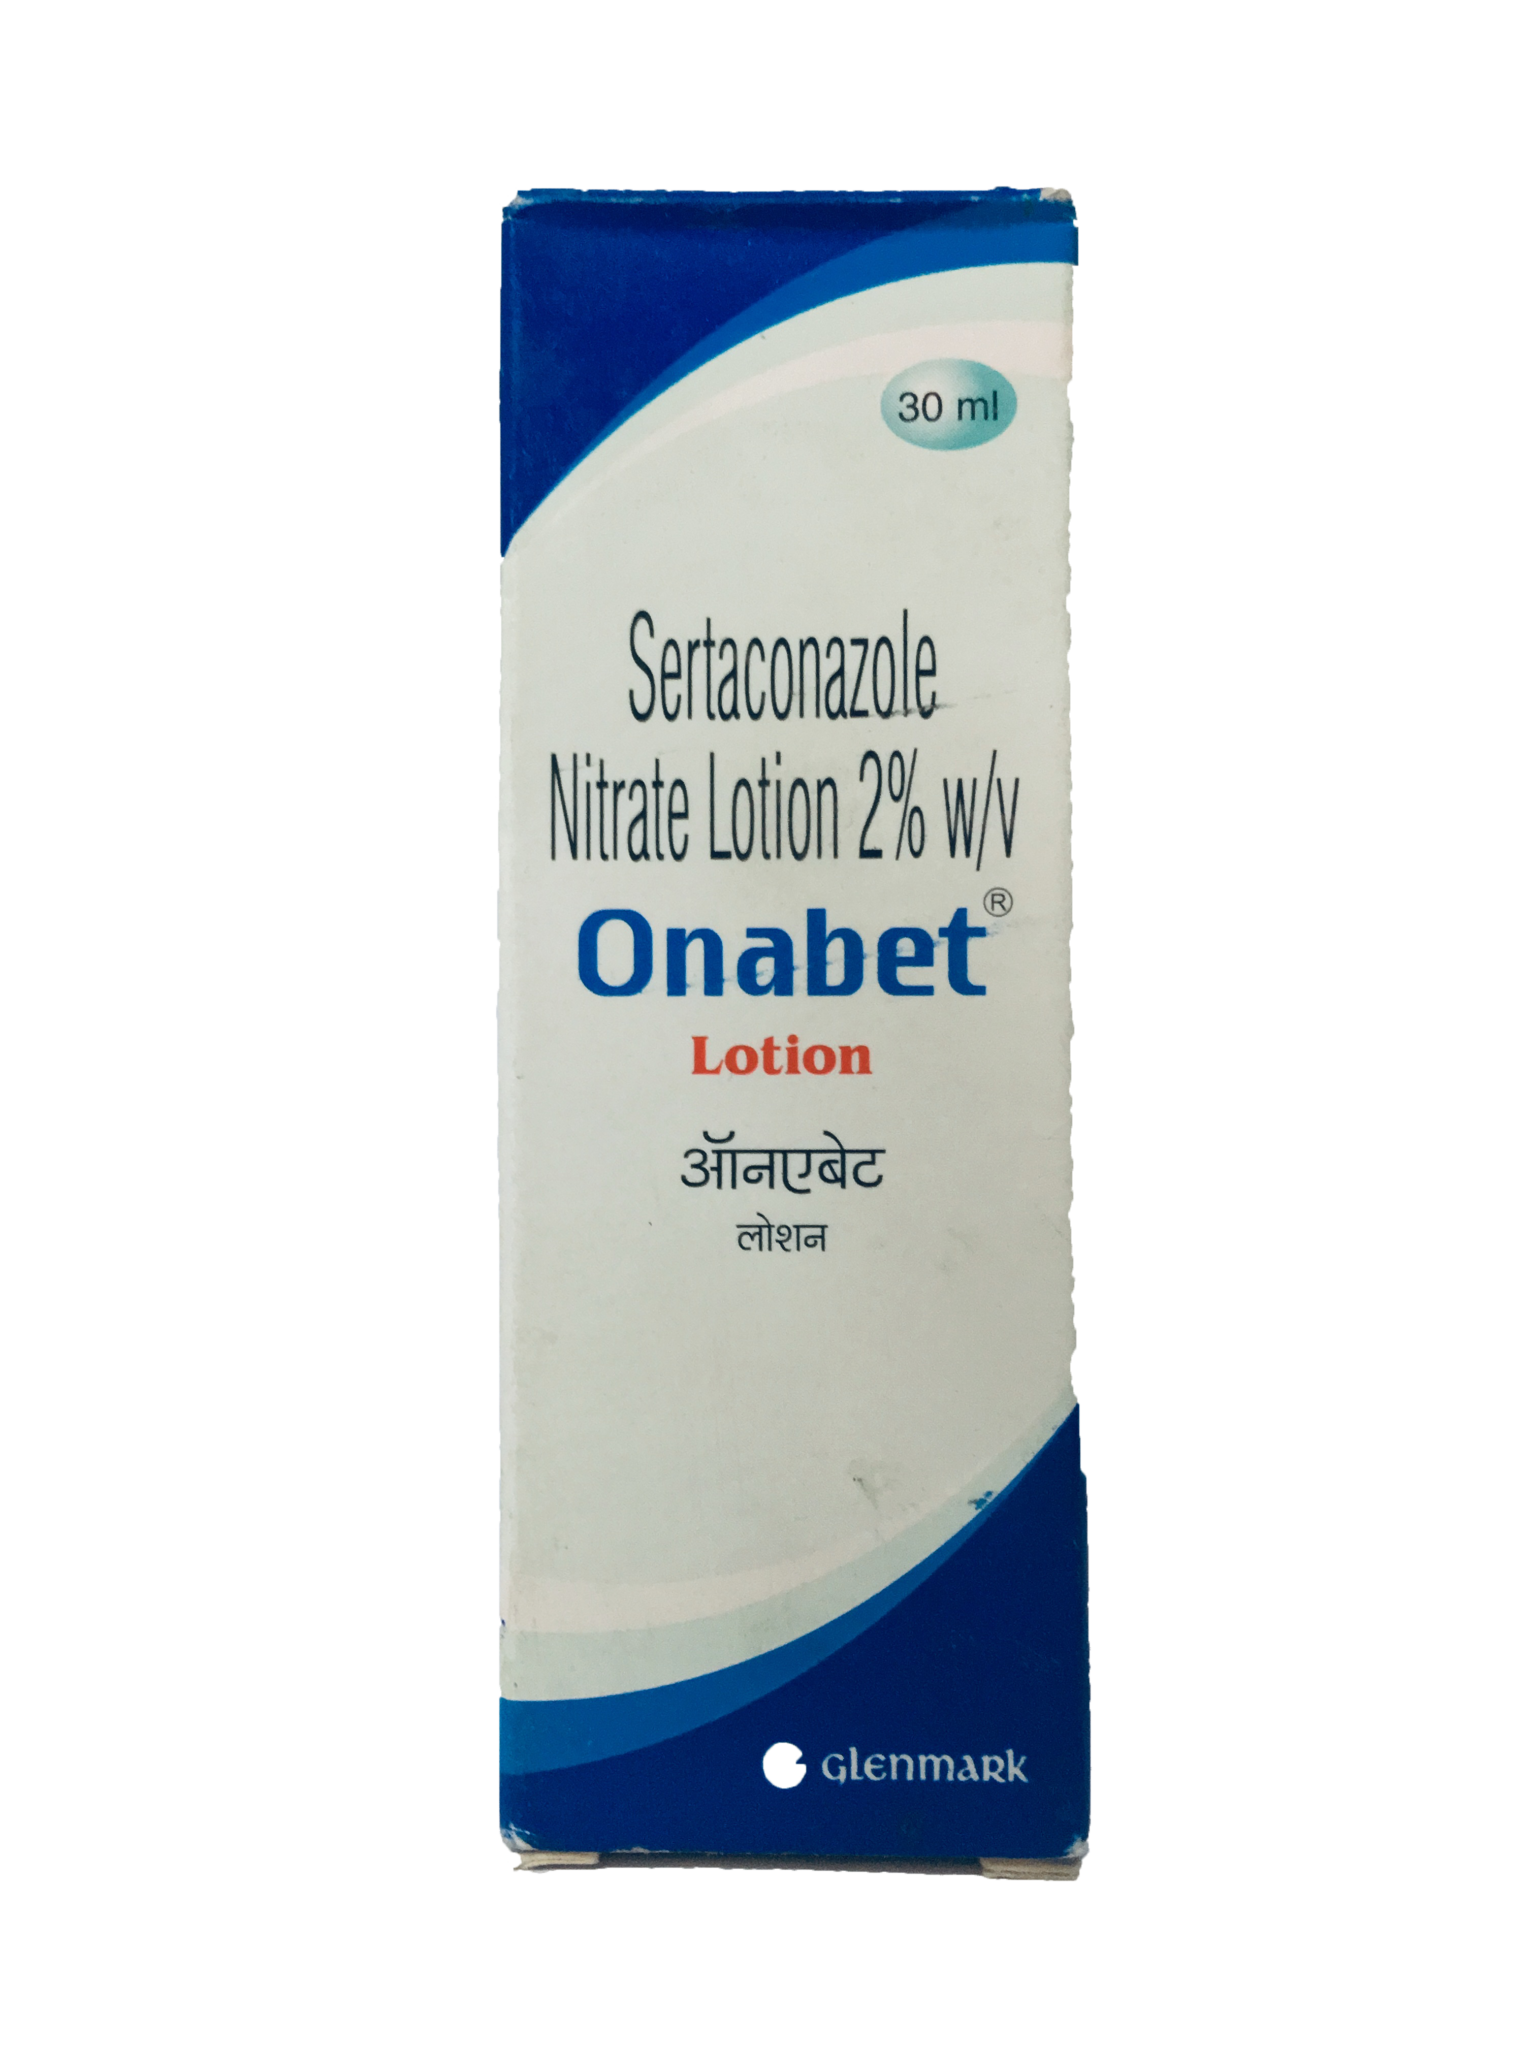 onabet cream for ringworm